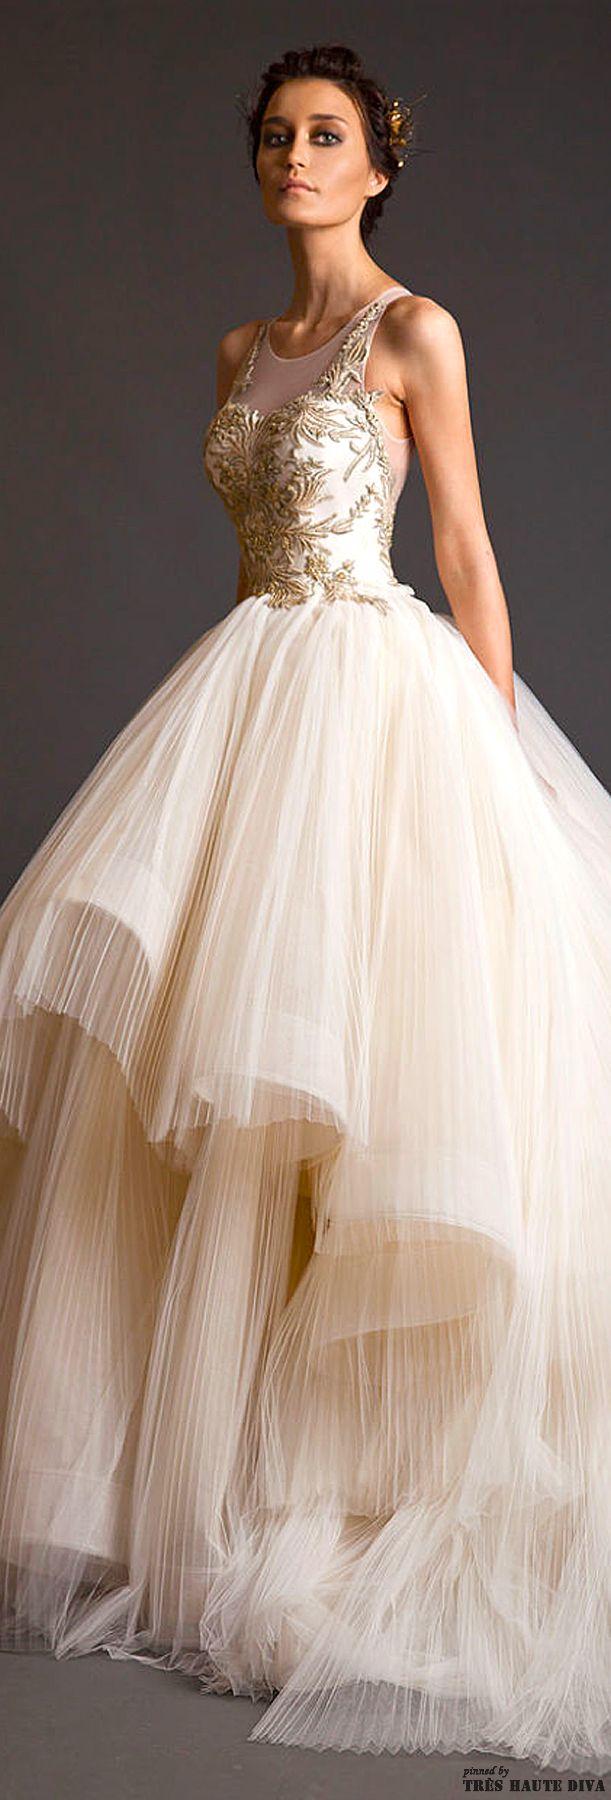 Hochzeit - Stunning Dresses To Try On:)